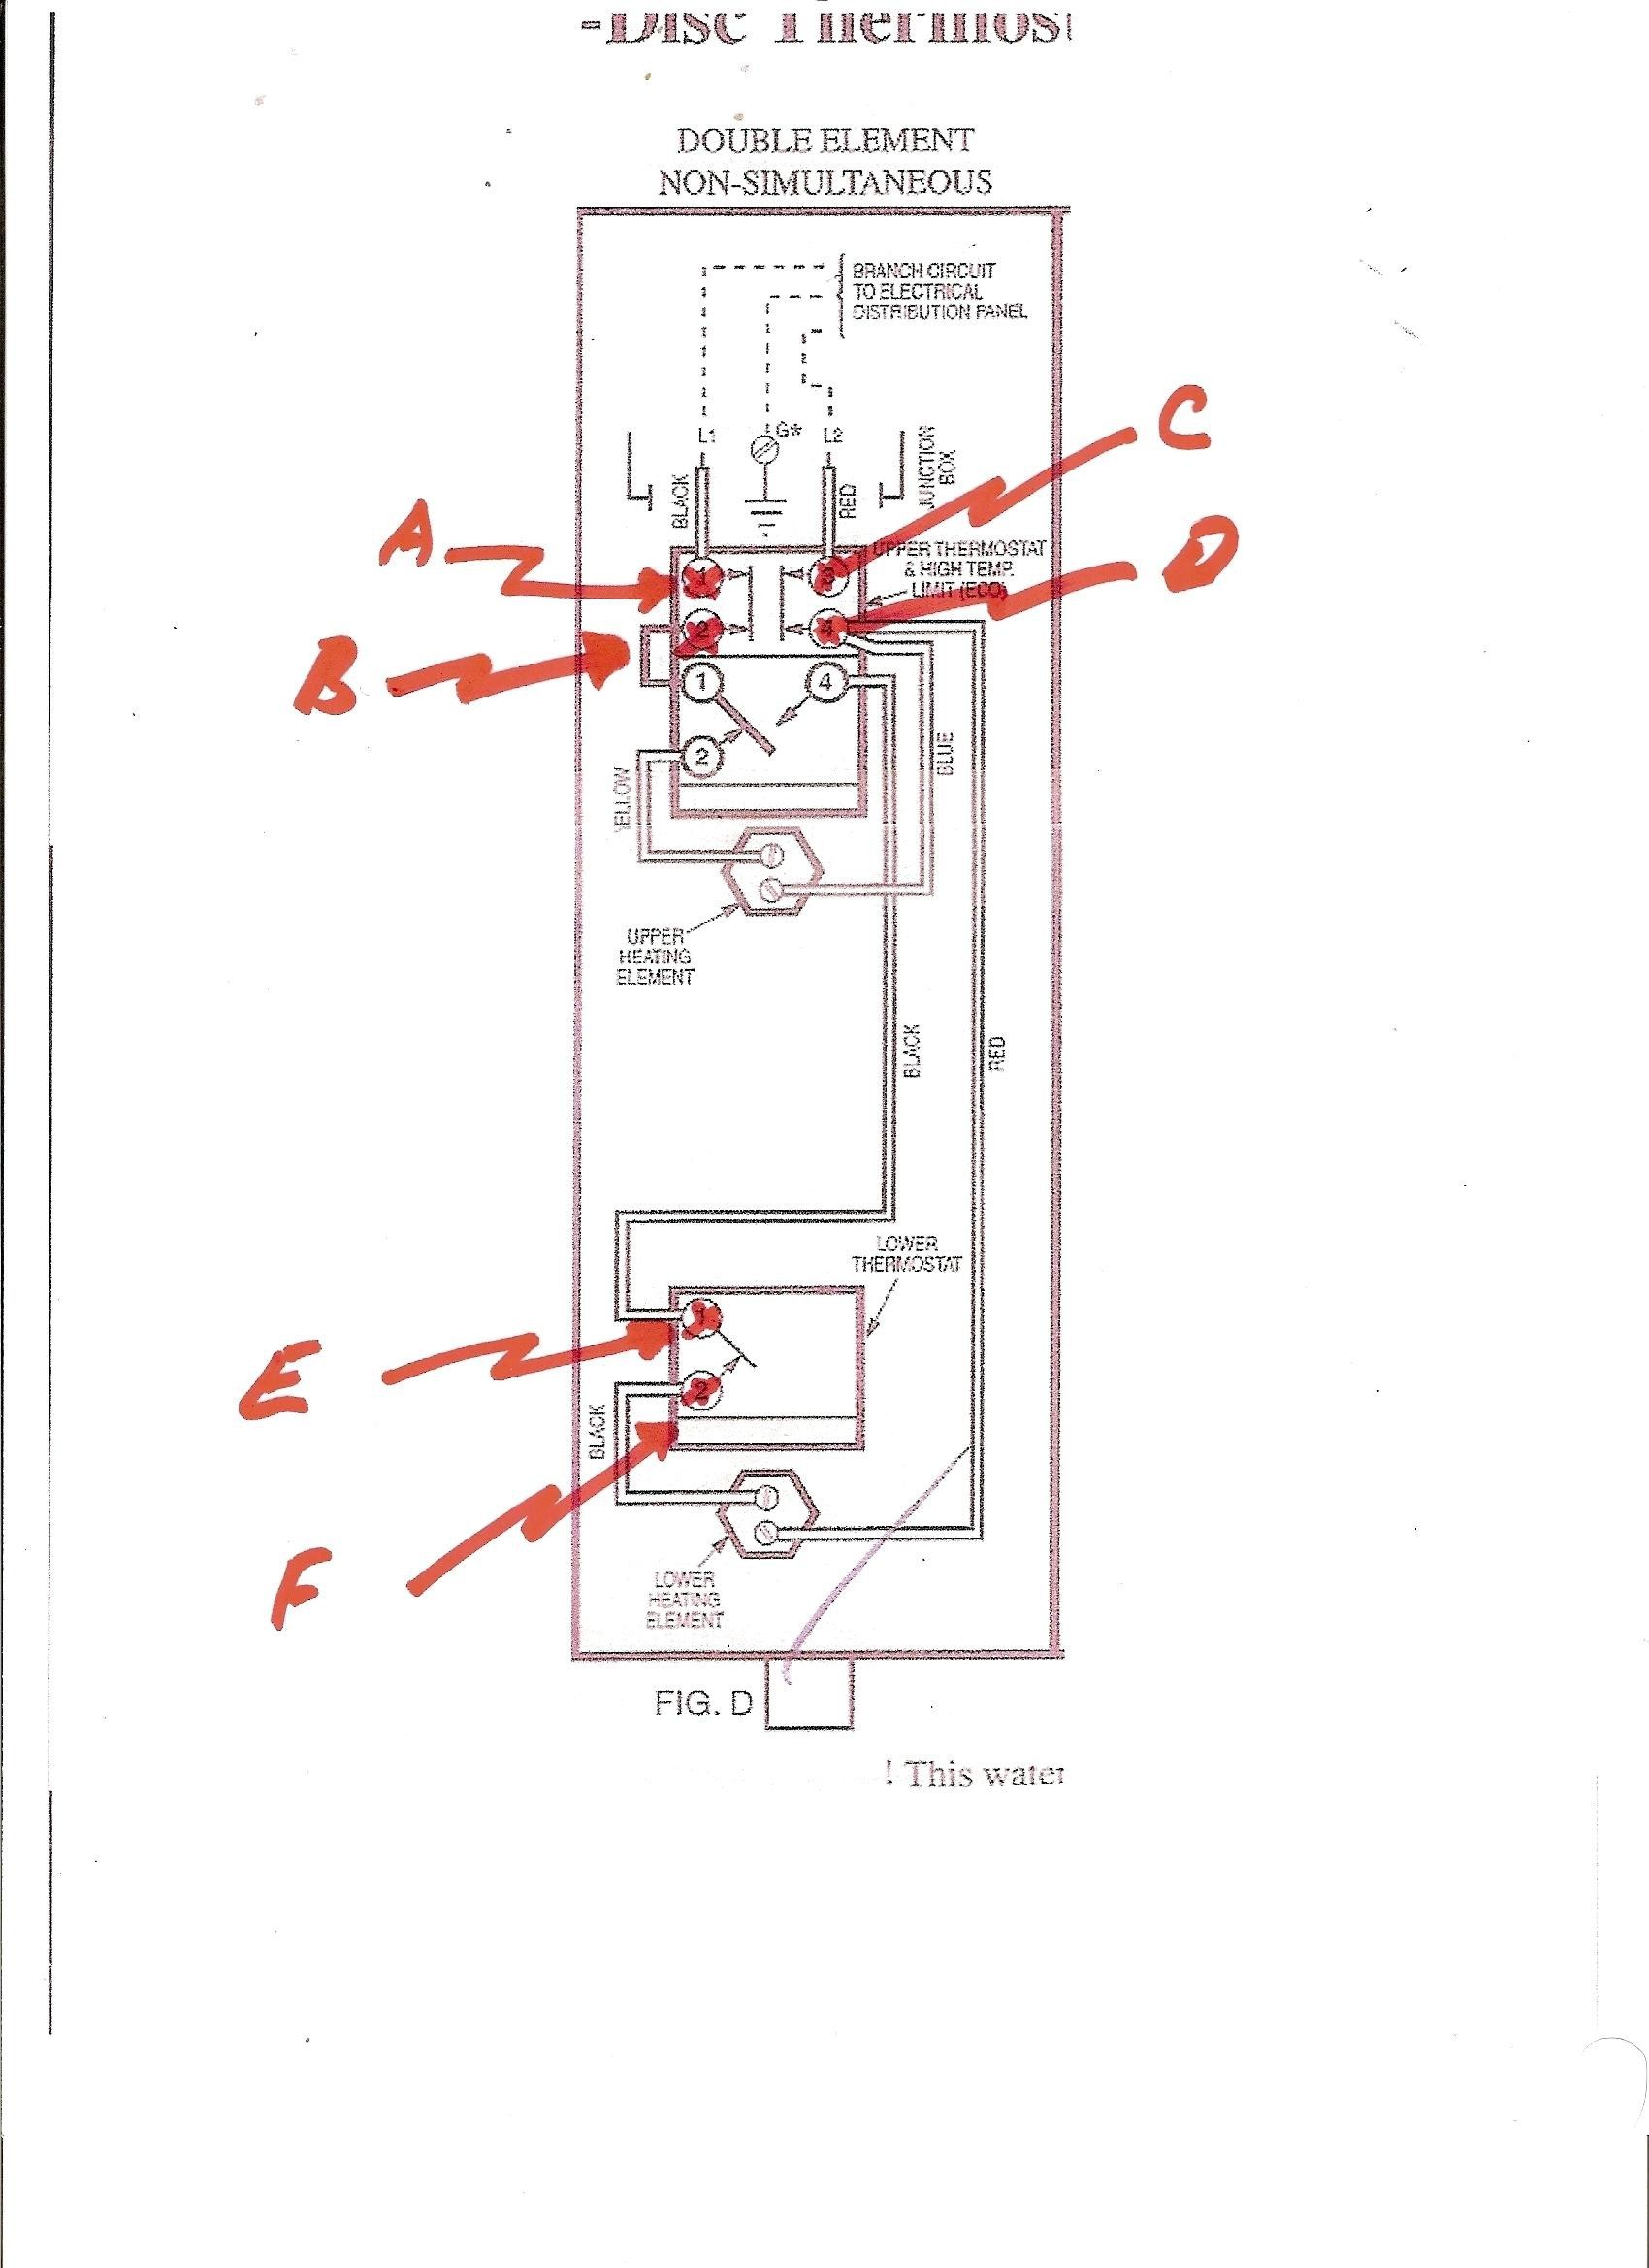 Water Heater Wiring Diagram Dual Element Awesome Rheem Wiring Diagram New Rheem Water Heater thermostat Wiring